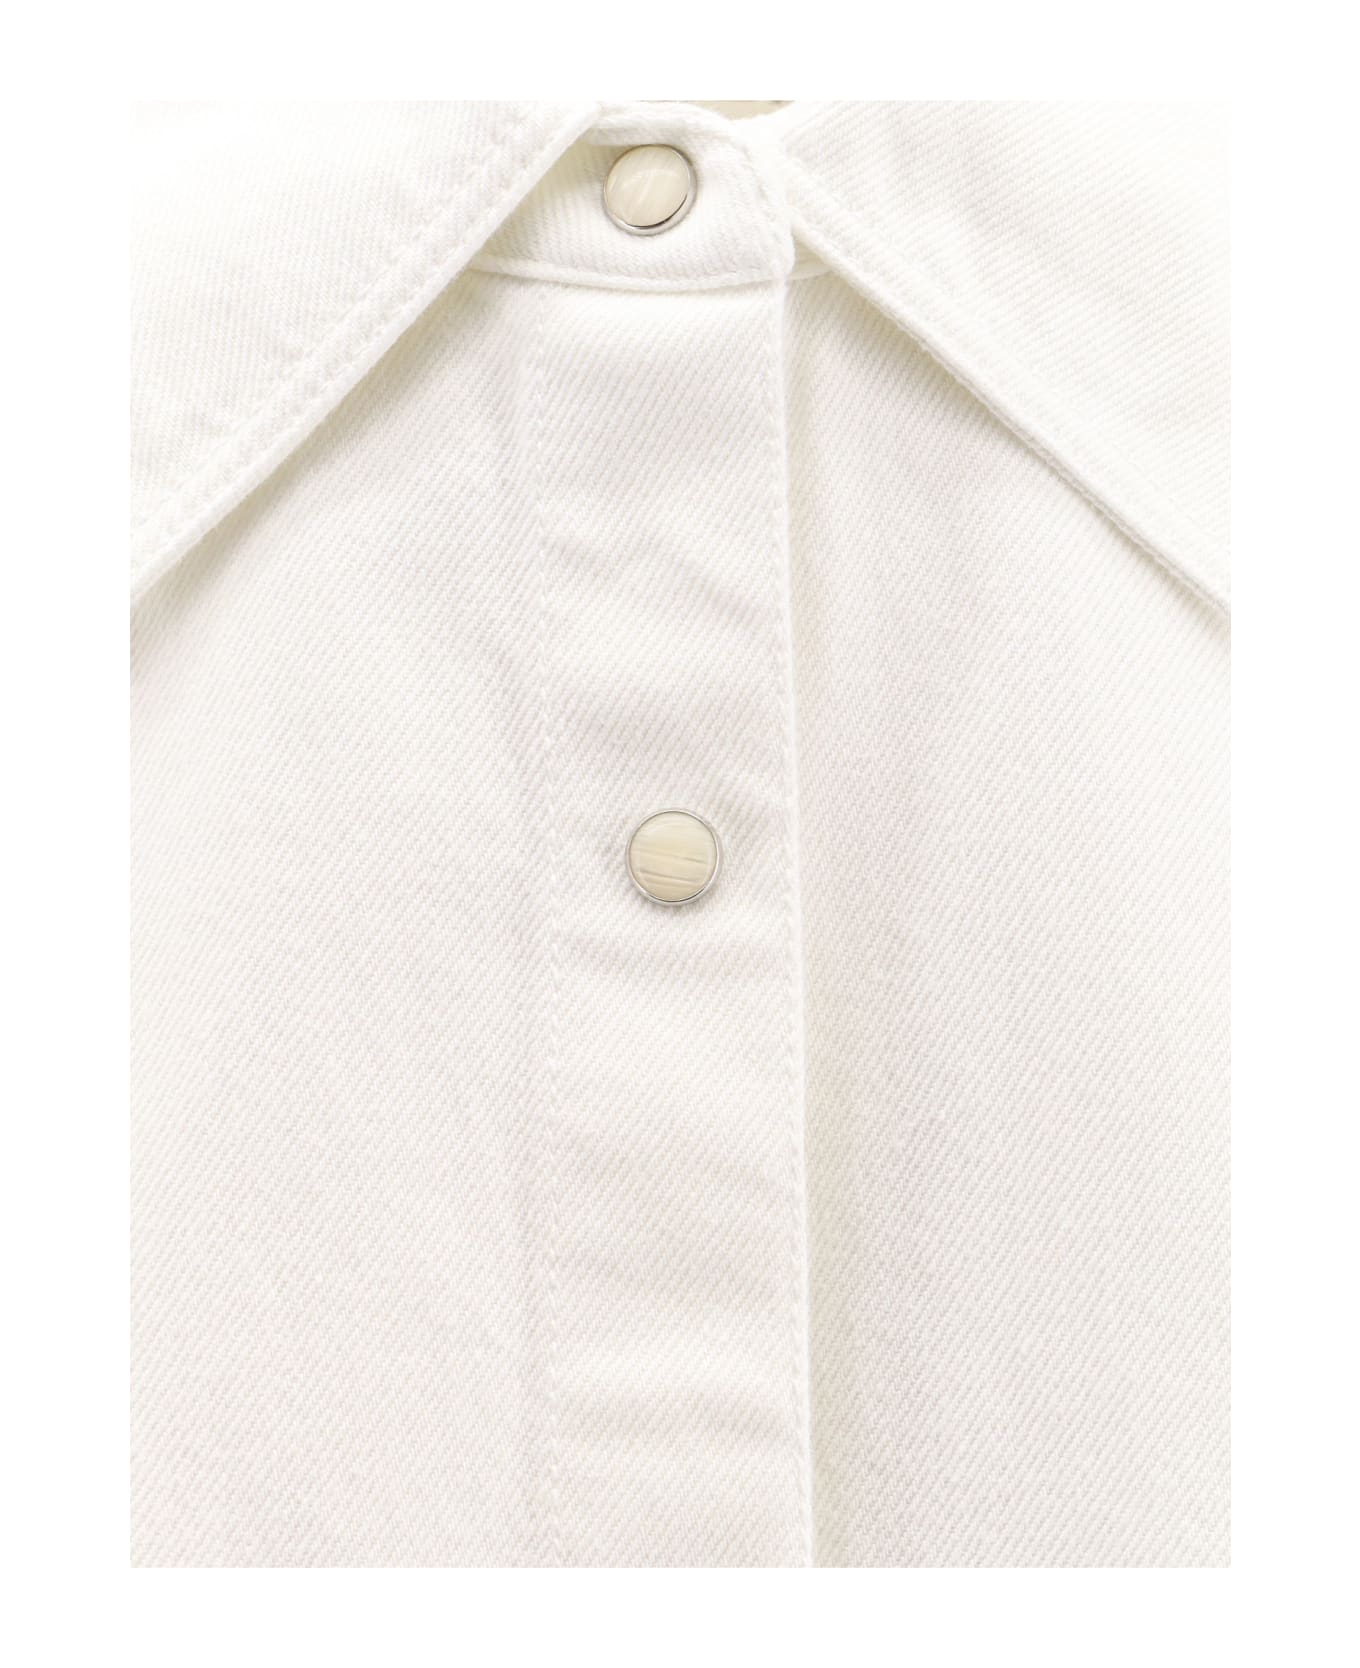 Closed Shirt - White シャツ